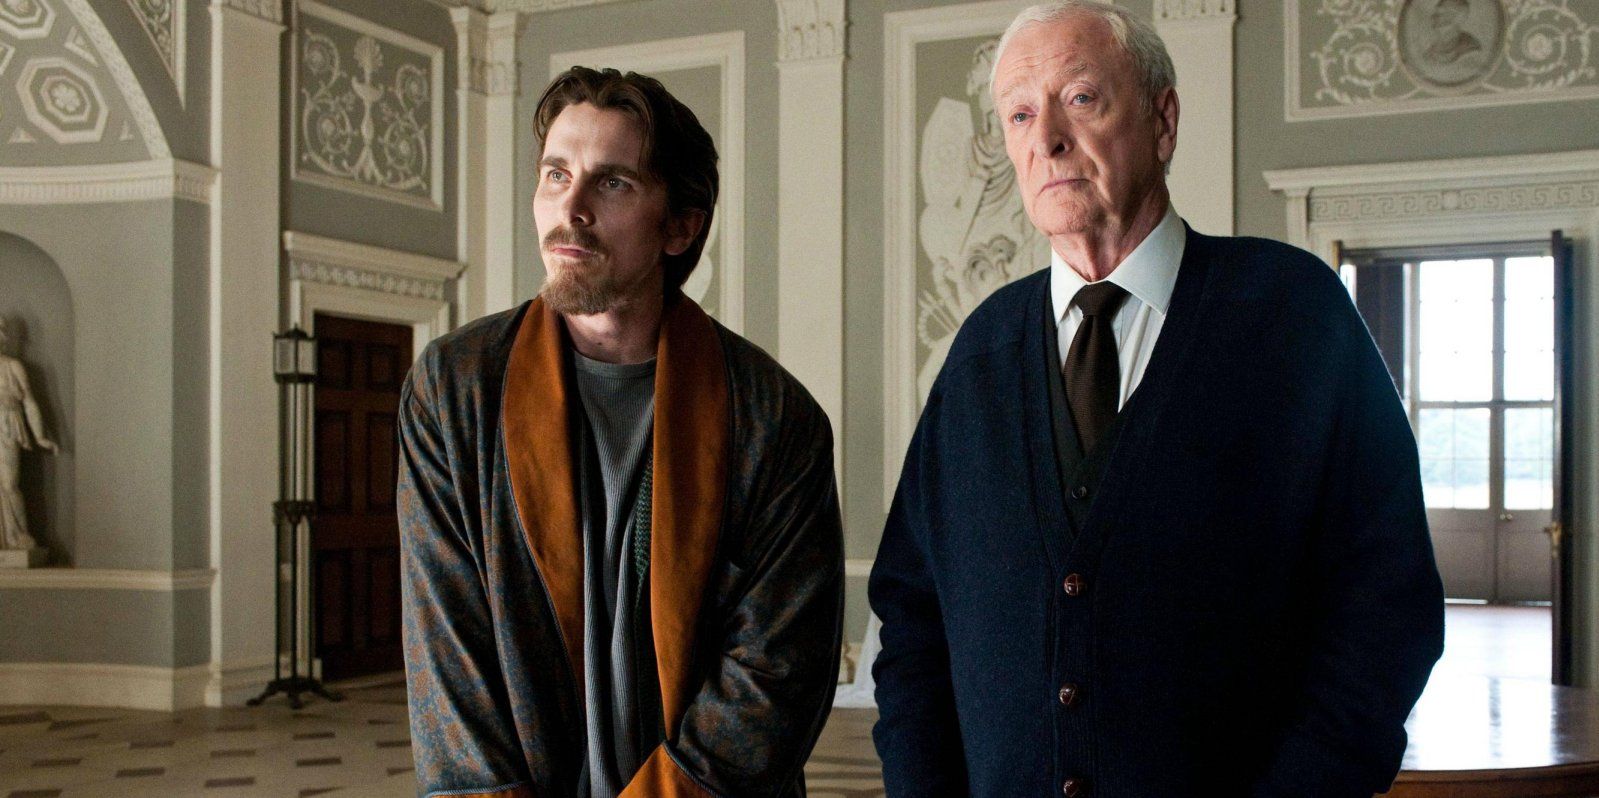 Christian Bale as Batman/Bruce Wayne and Michael Caine as Alfred Pennyworth